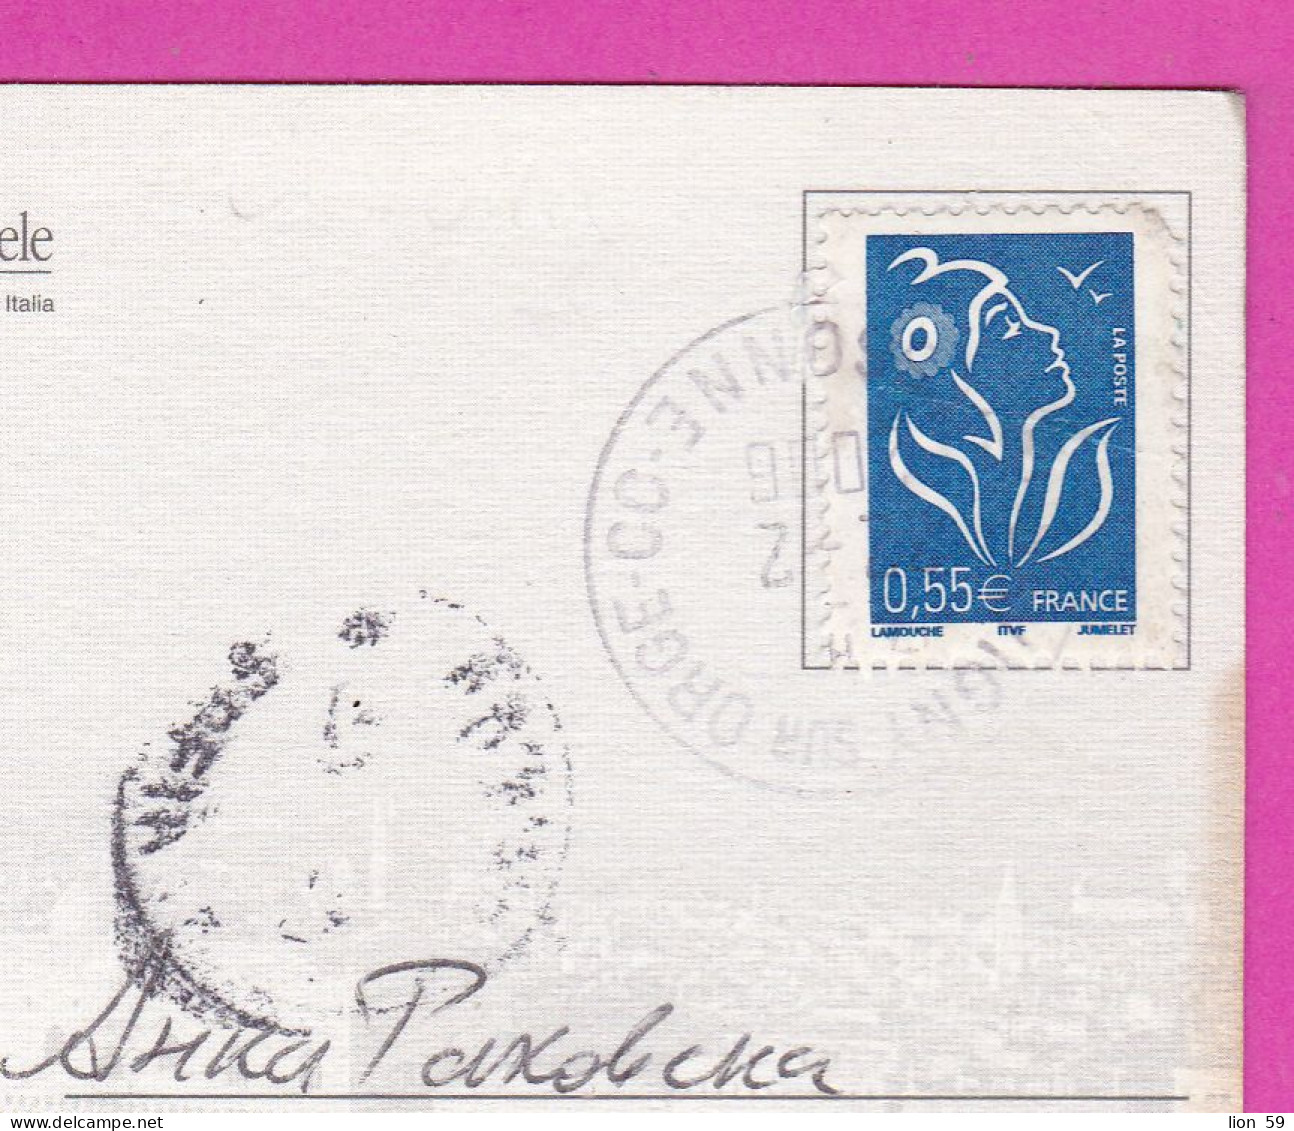 294122 / France - VENEZIA (Italy)  PC 2006 Brétigny-sur-Orge USED  0.55 € - Marianne Of Lamouche , Frankreich Francia - Lettres & Documents